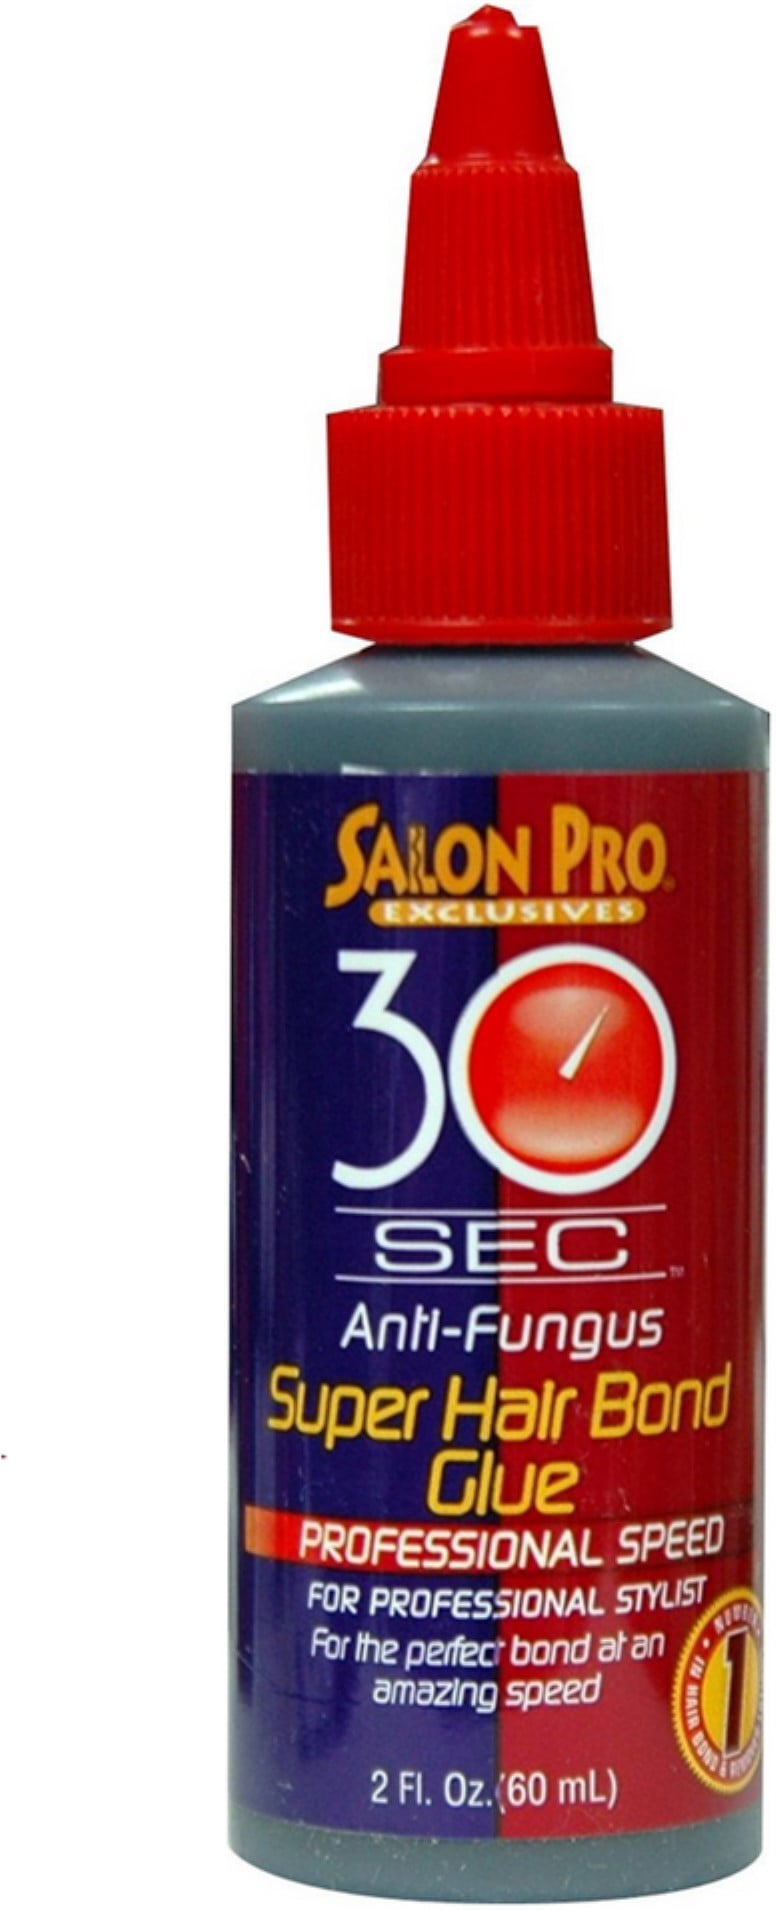 Salon Pro 30 Second Hair Bonding Glue 2 oz 